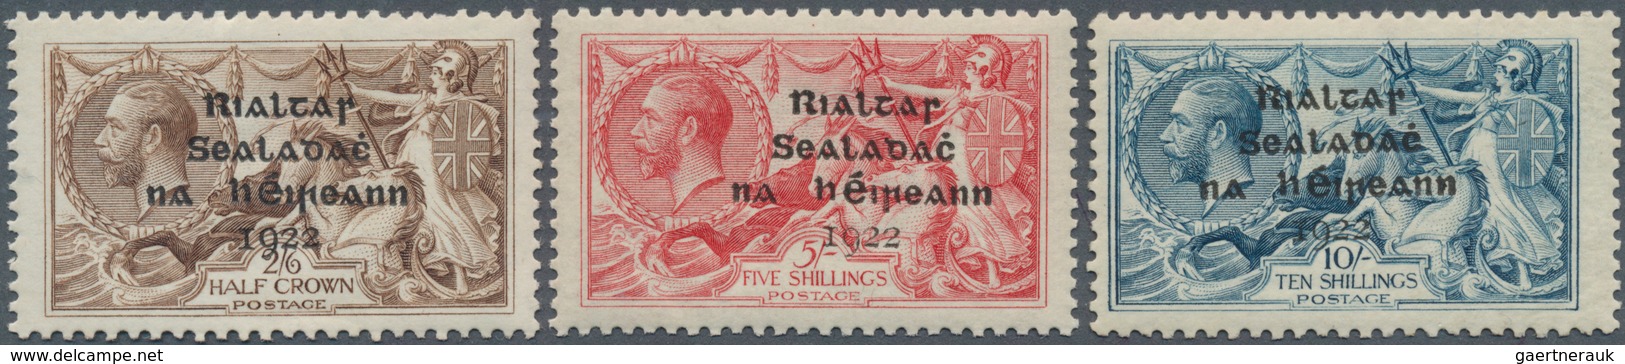 14306 Irland: 1922, "Rialtas" Overprints, Dollard Printing, Three High Values Unmounted Mint (few Irregula - Lettres & Documents